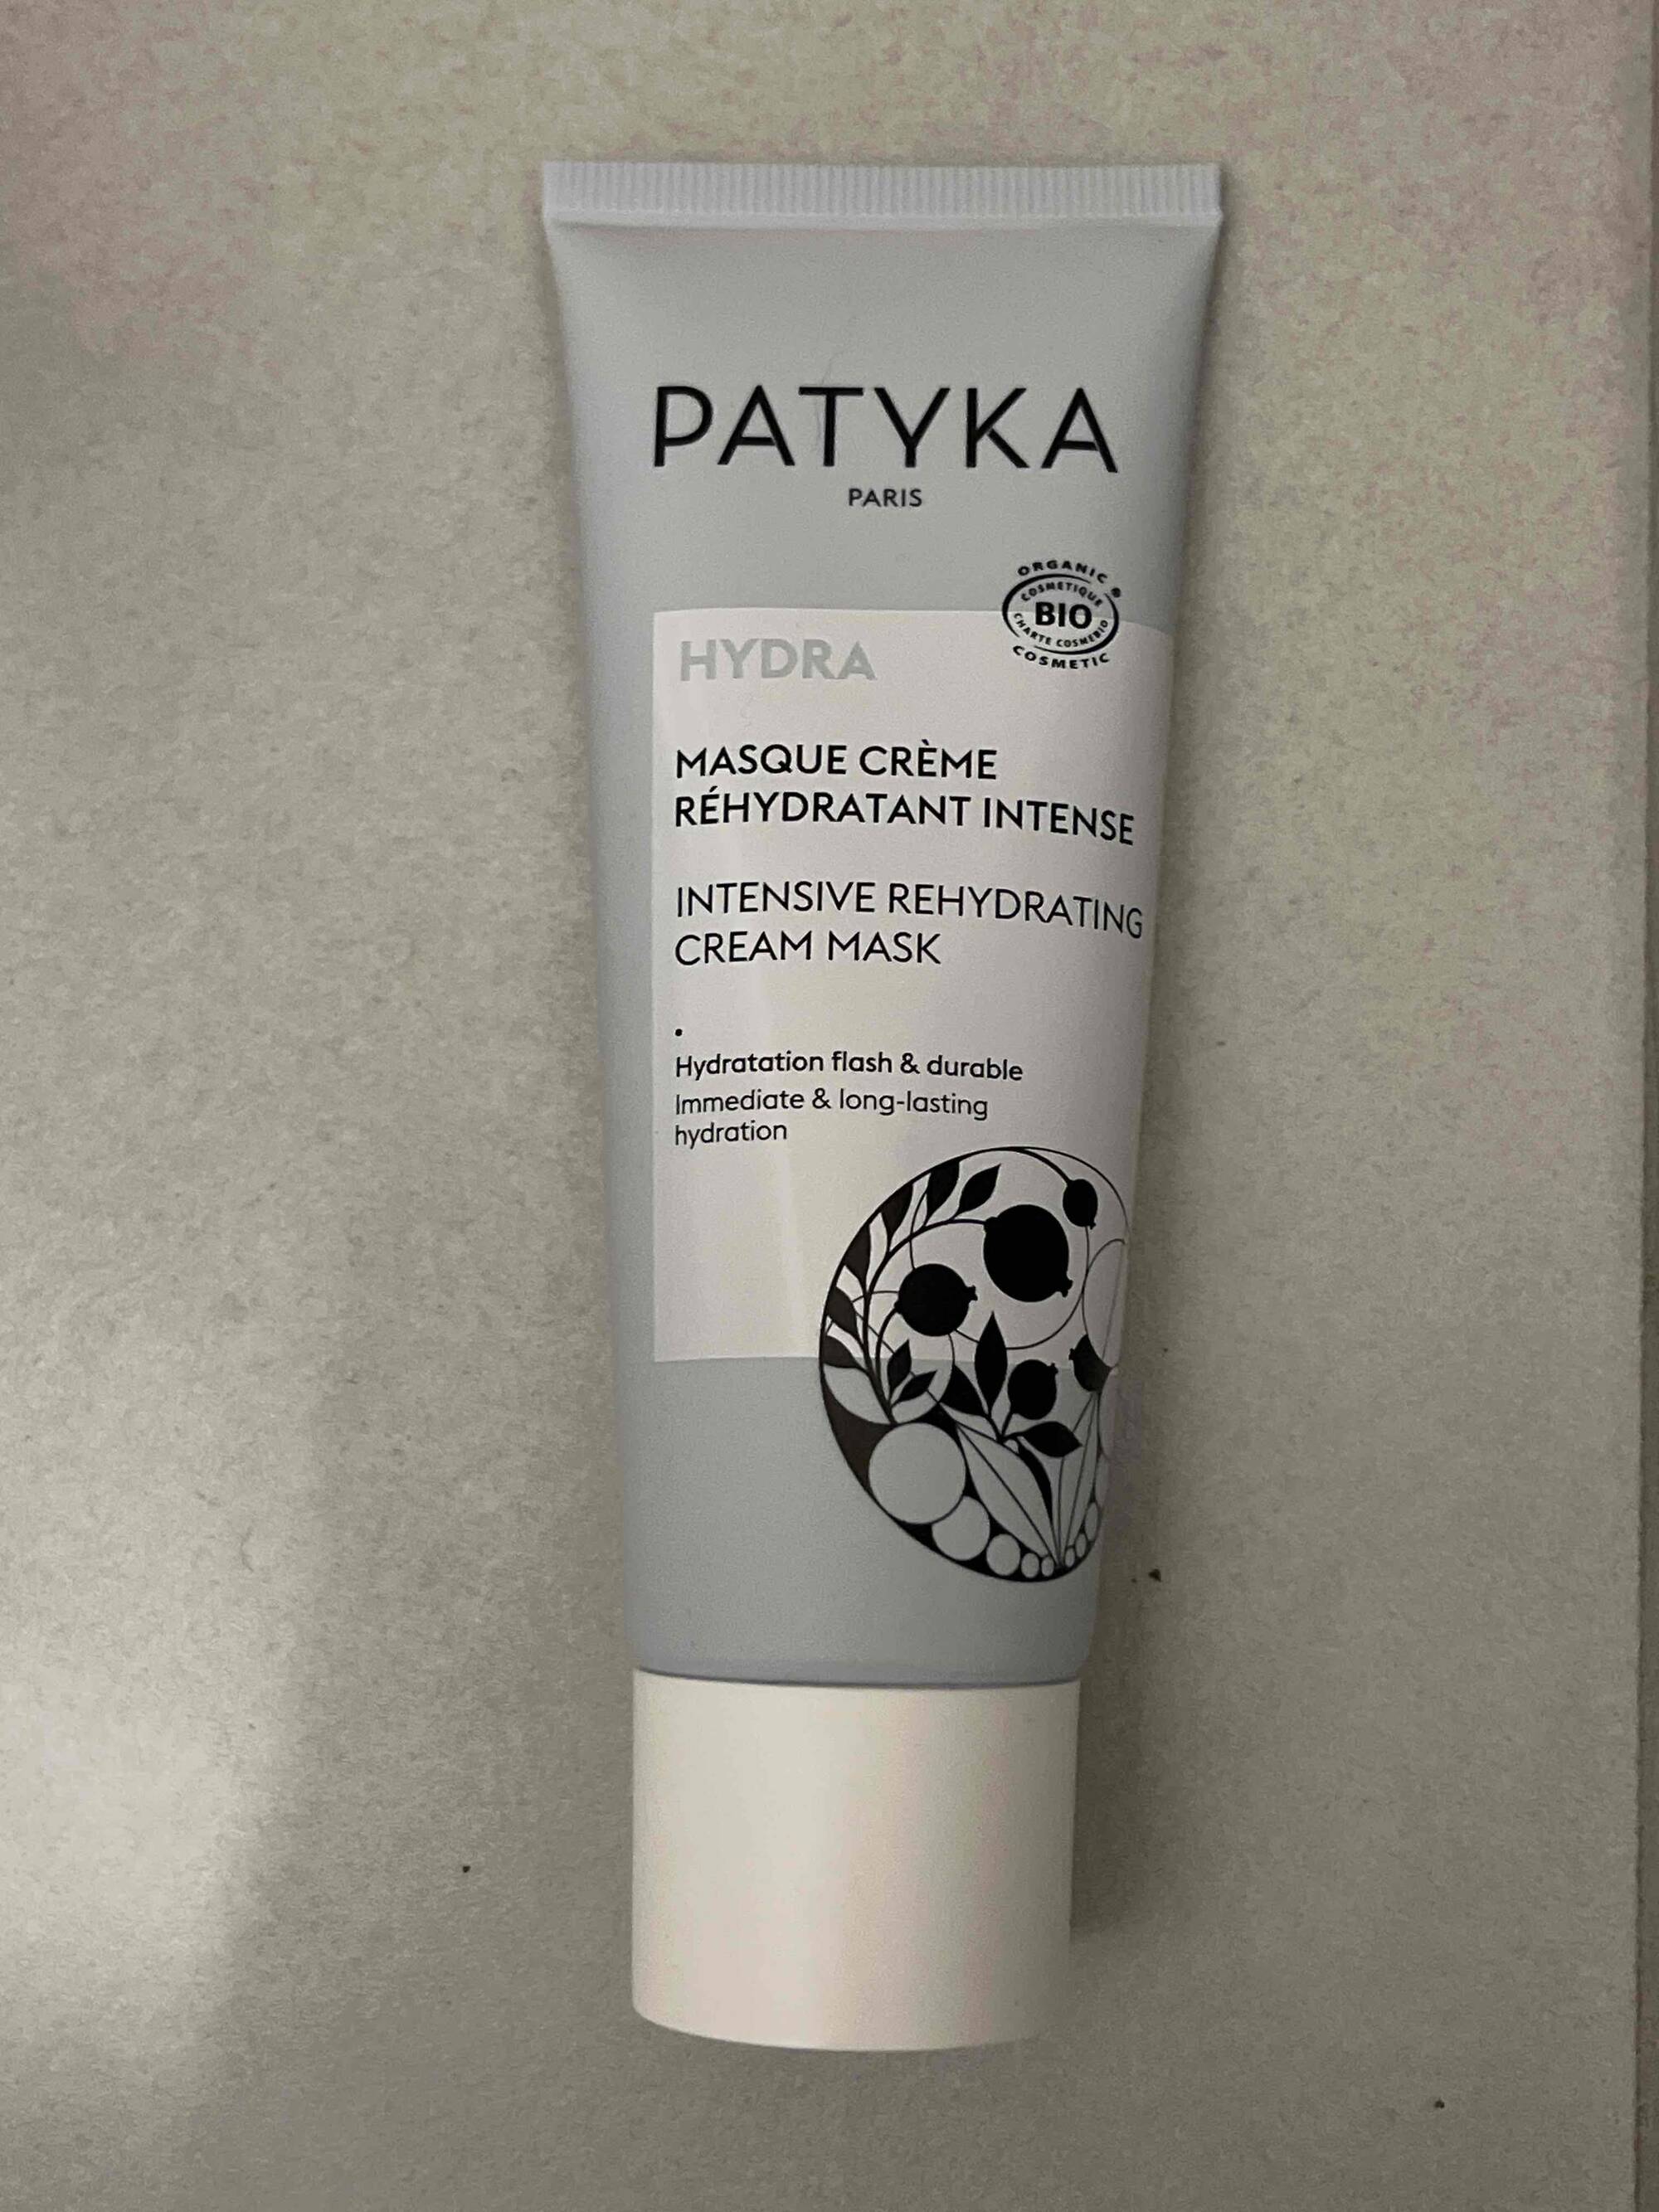 PATYKA - Hydra - Masque crème réhydratant intense